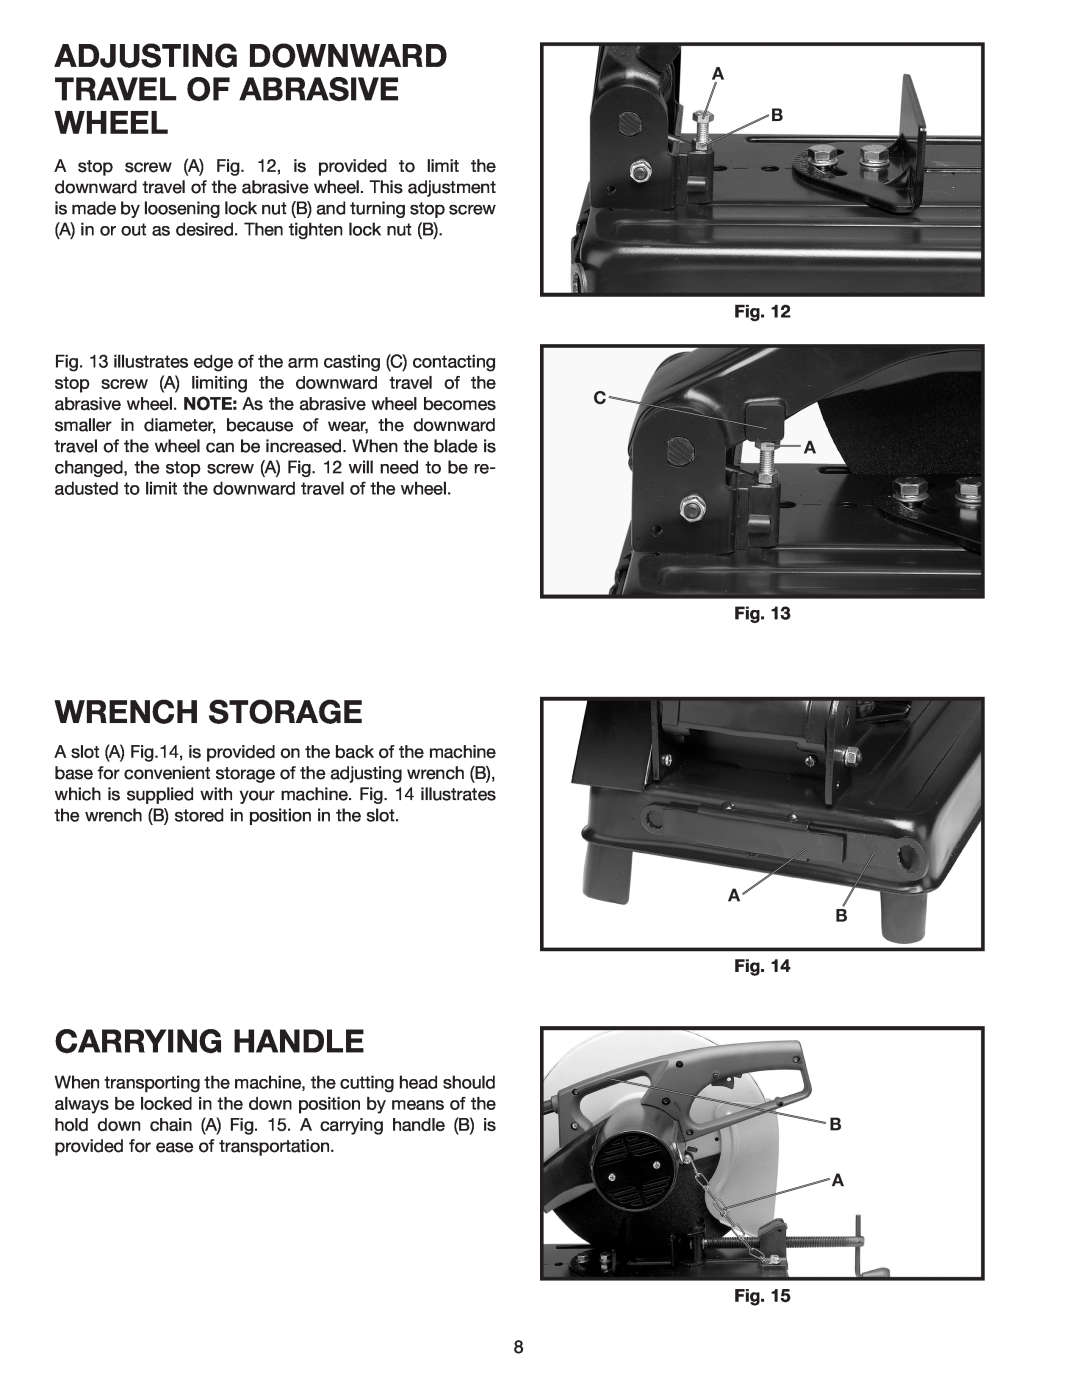 Porter-Cable 909516, 1400 instruction manual Adjusting Downward Travel Of Abrasive Wheel, Wrench Storage, Carrying Handle 